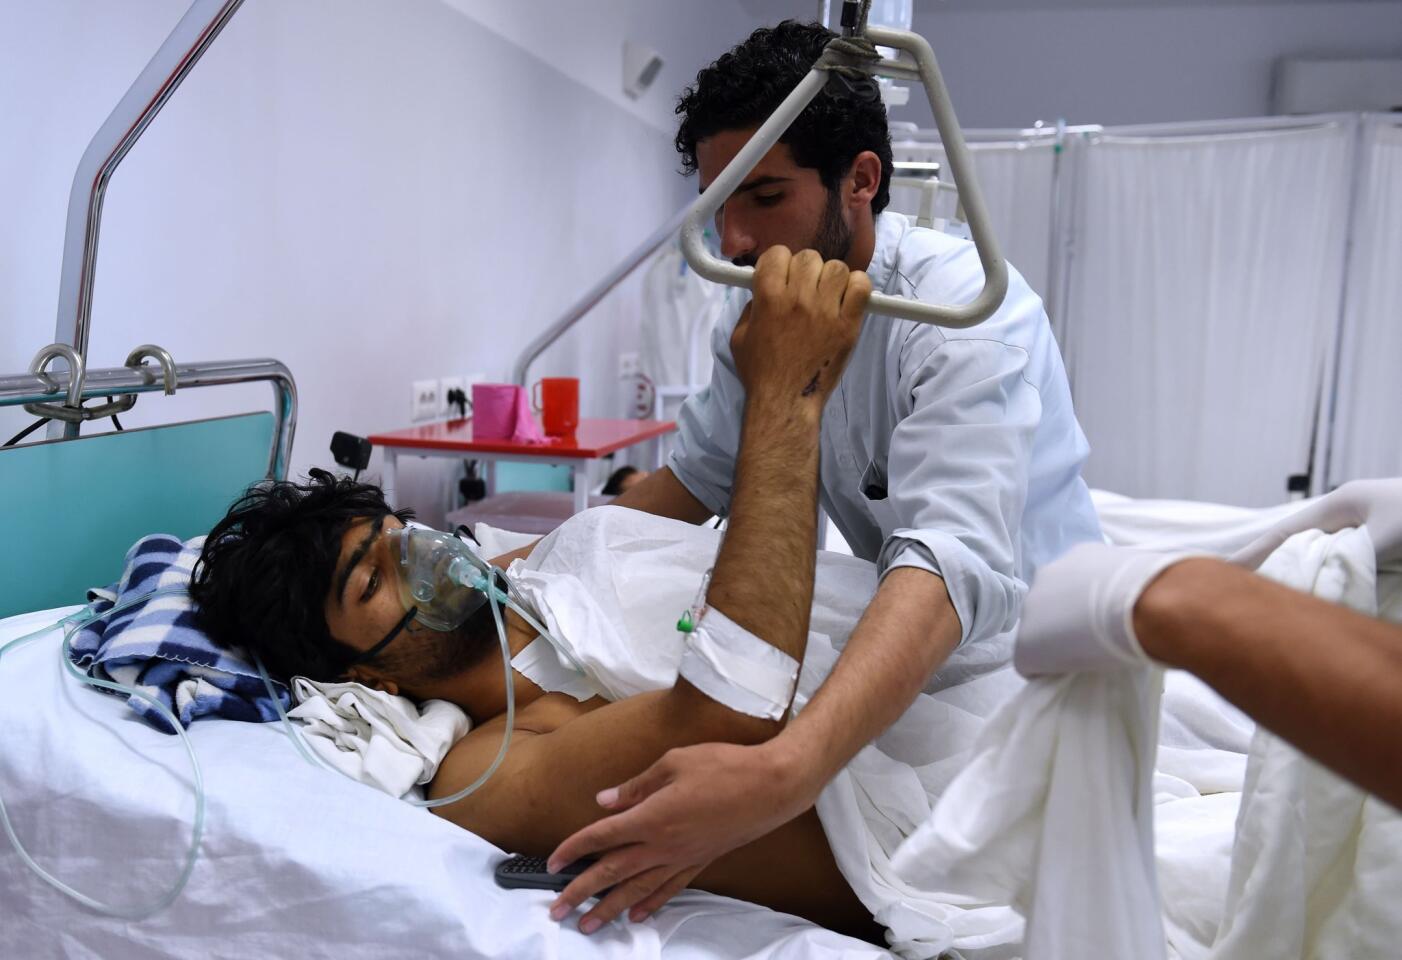 Afghanistan hospital bombing